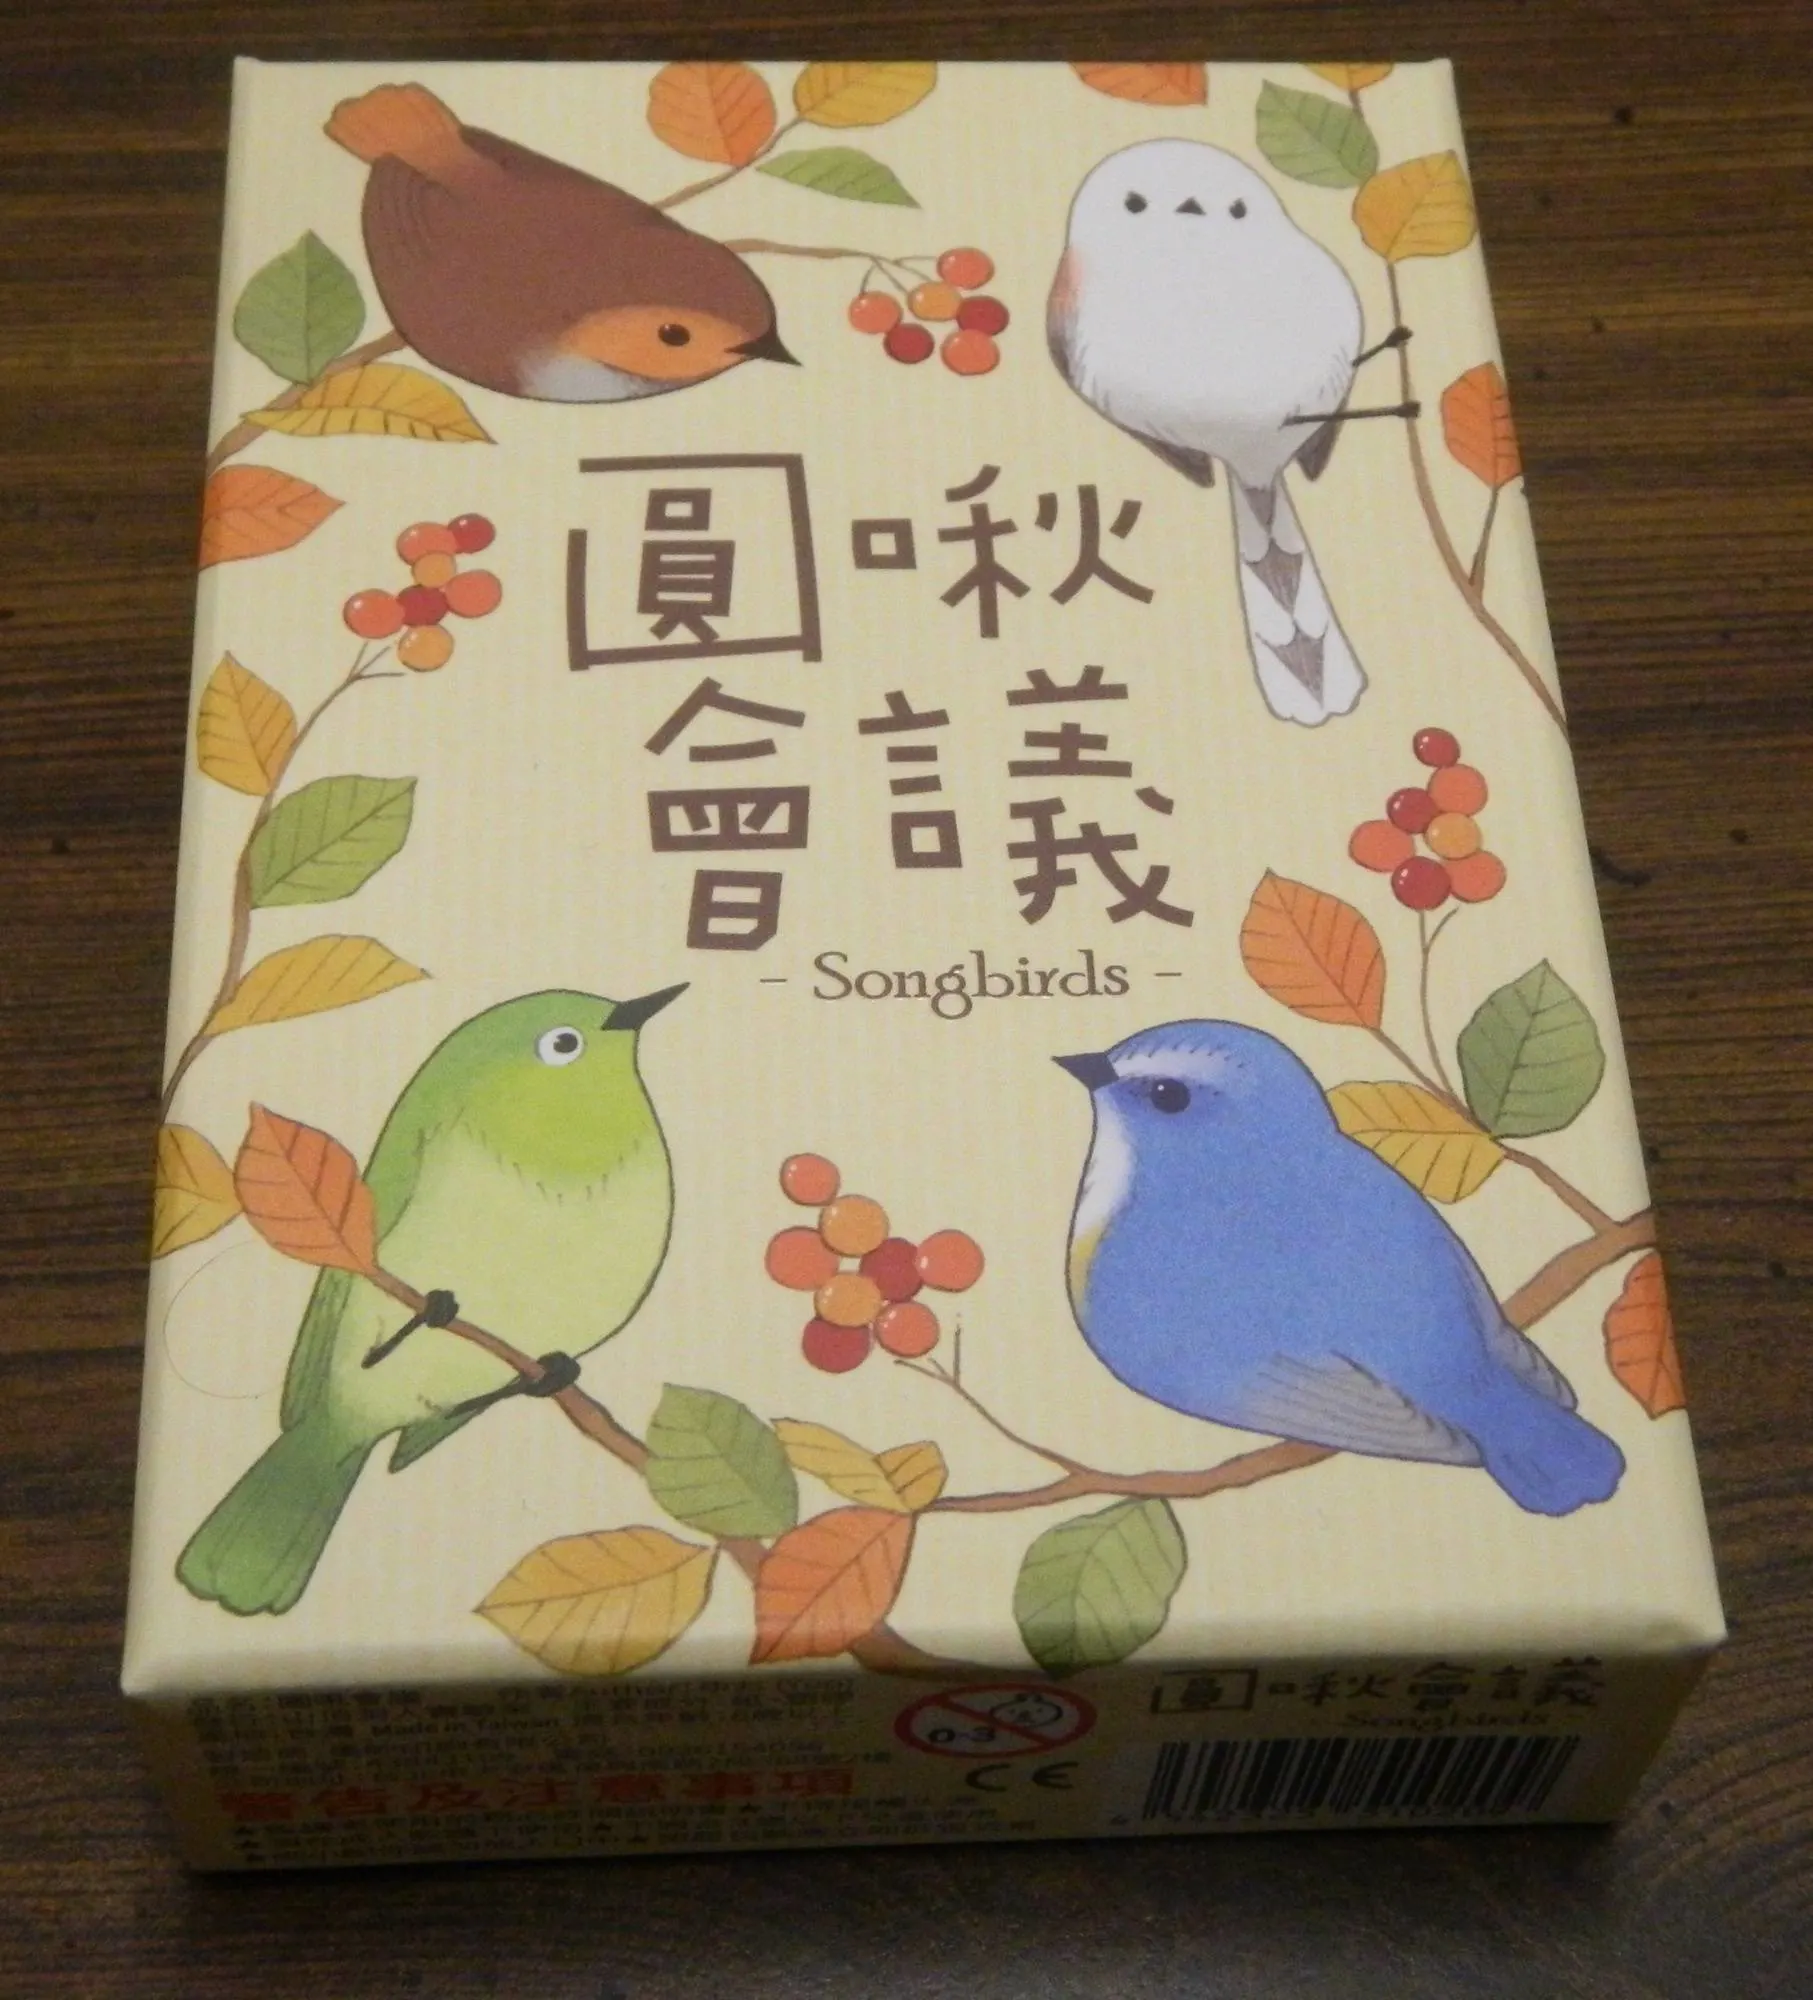 Box for Songbirds